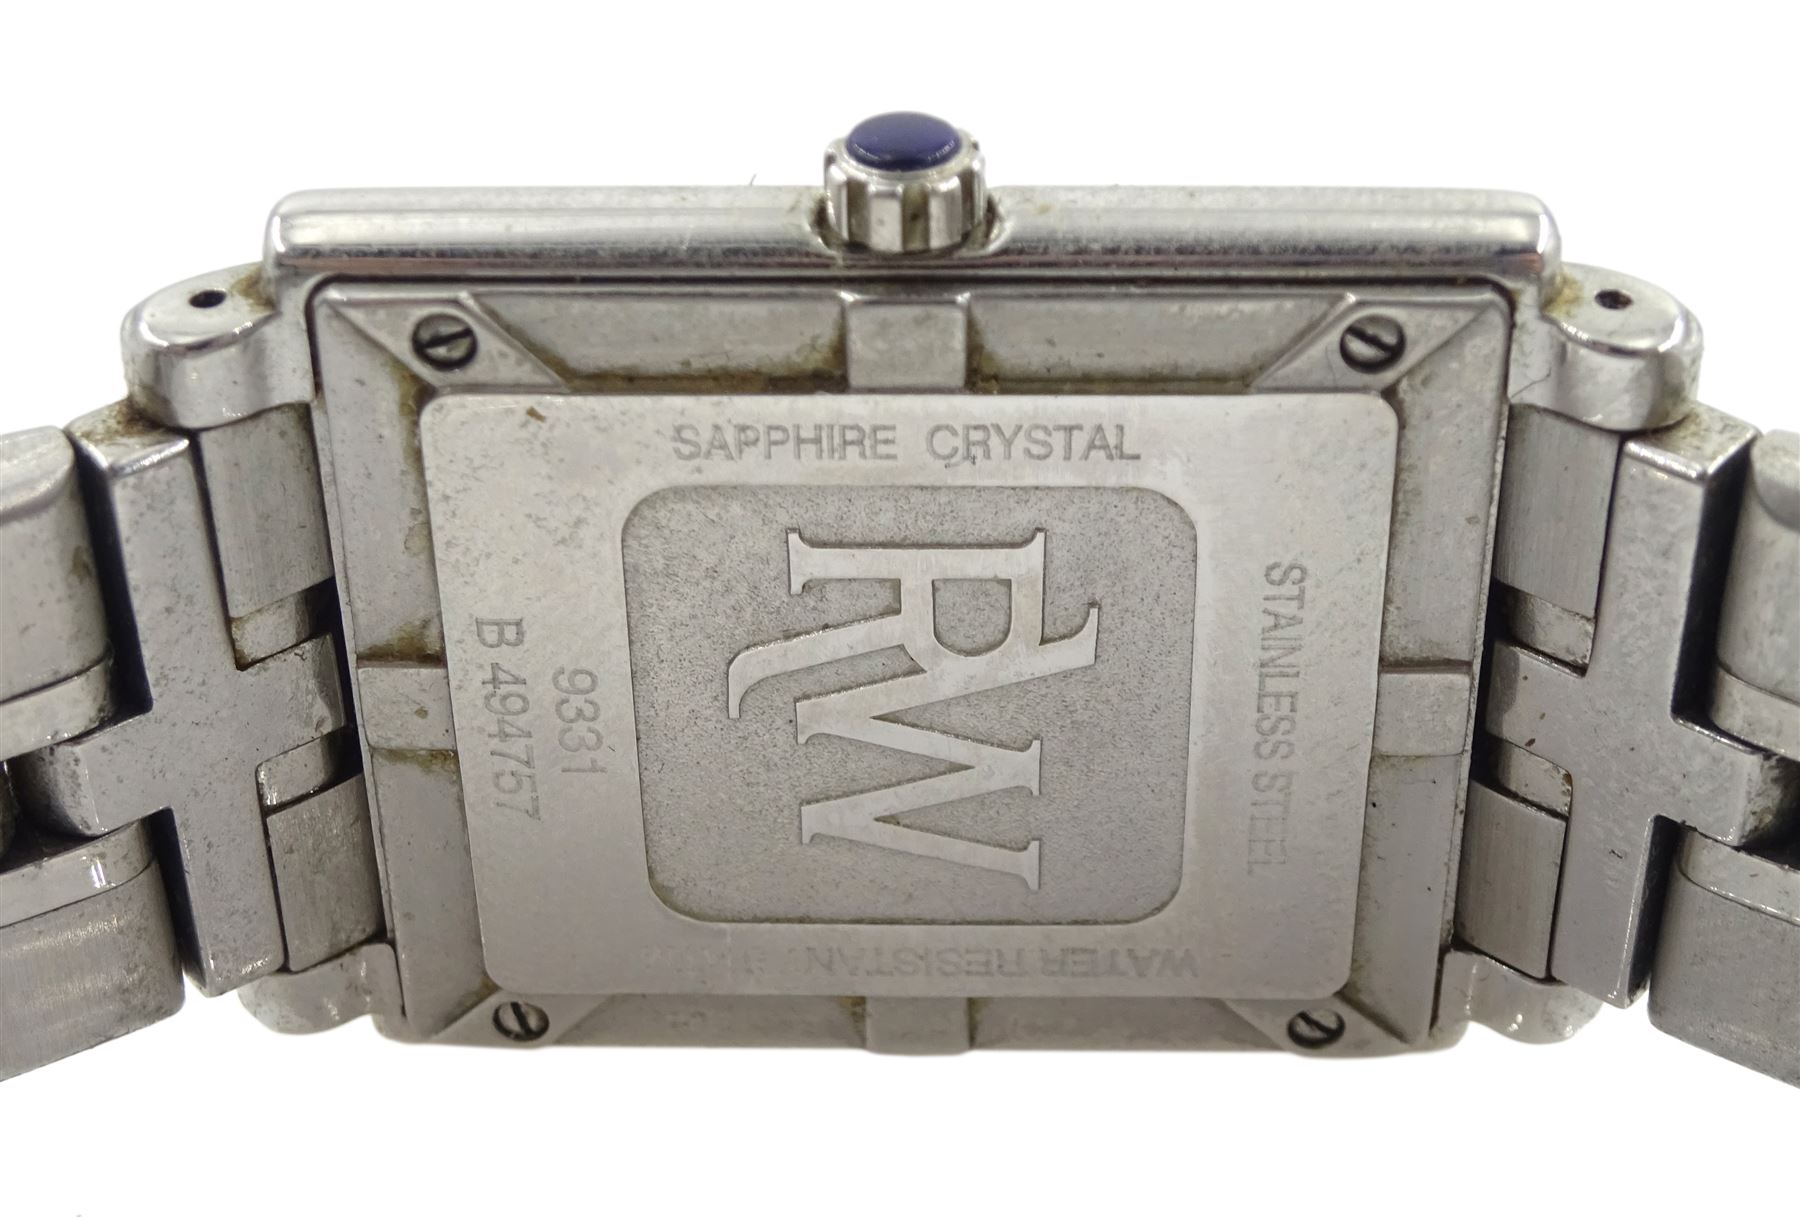 Raymond Weil Parsifal gentleman's stainless steel quartz wristwatch - Image 2 of 5